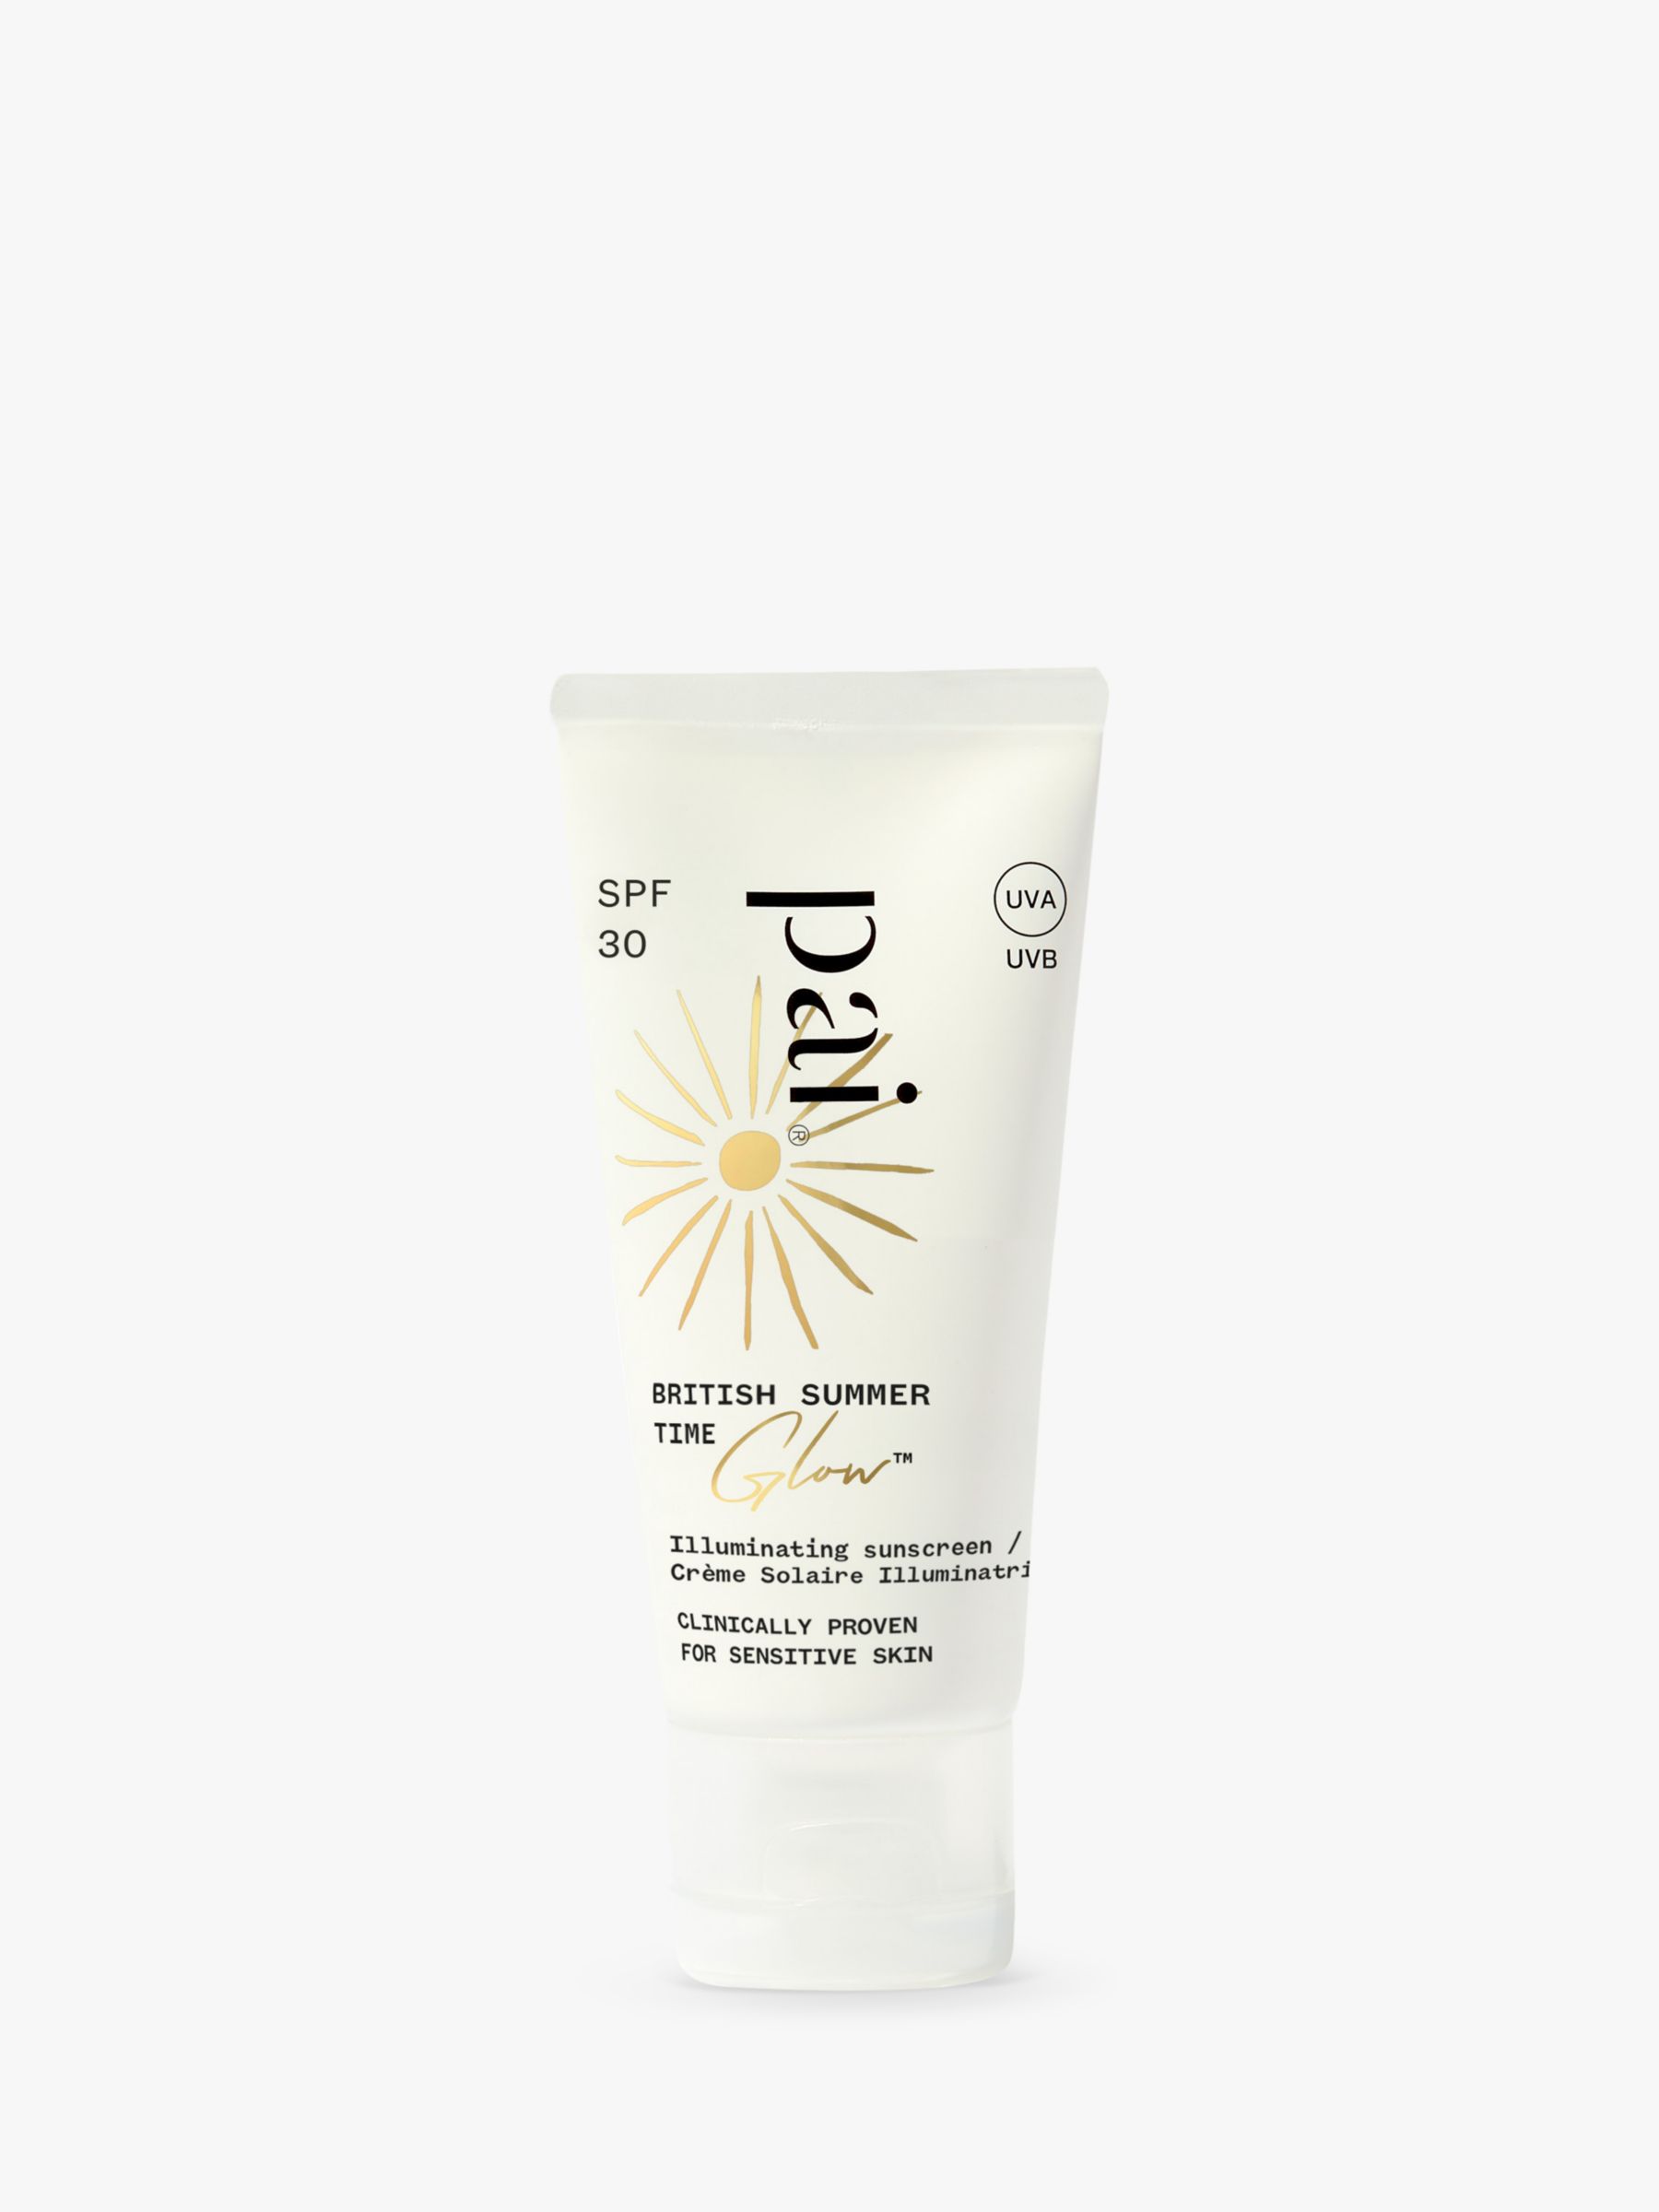 PAI British Summer Time Glow SPF 30 Illuminating Sunscreen, 40ml 1